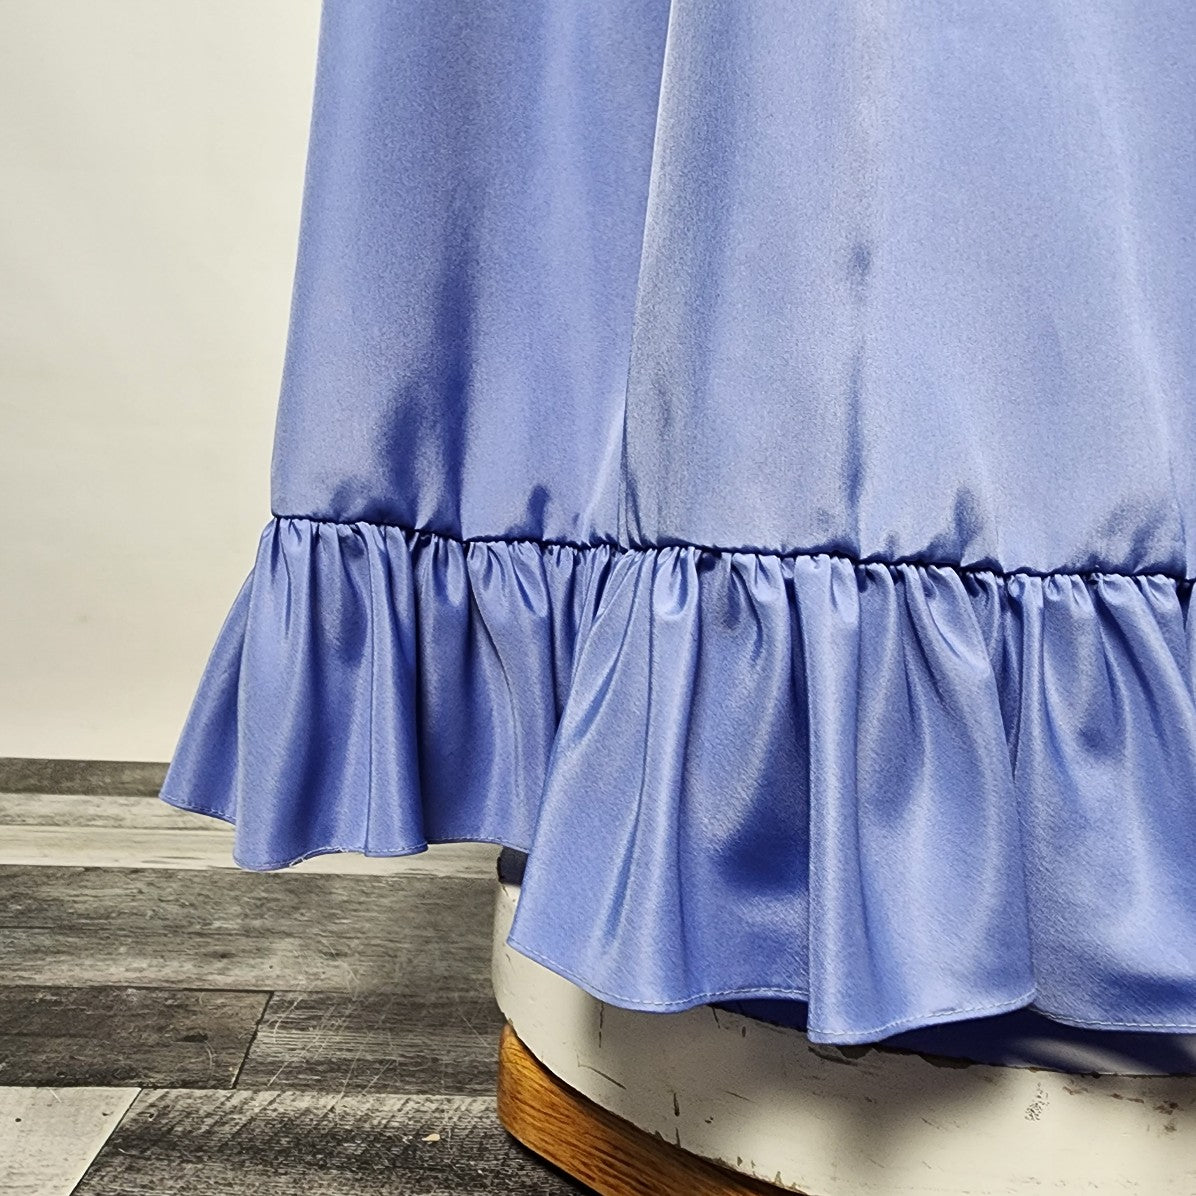 Vintage Periwinkle Satin Dress with Ruffle Jacket Size S/M